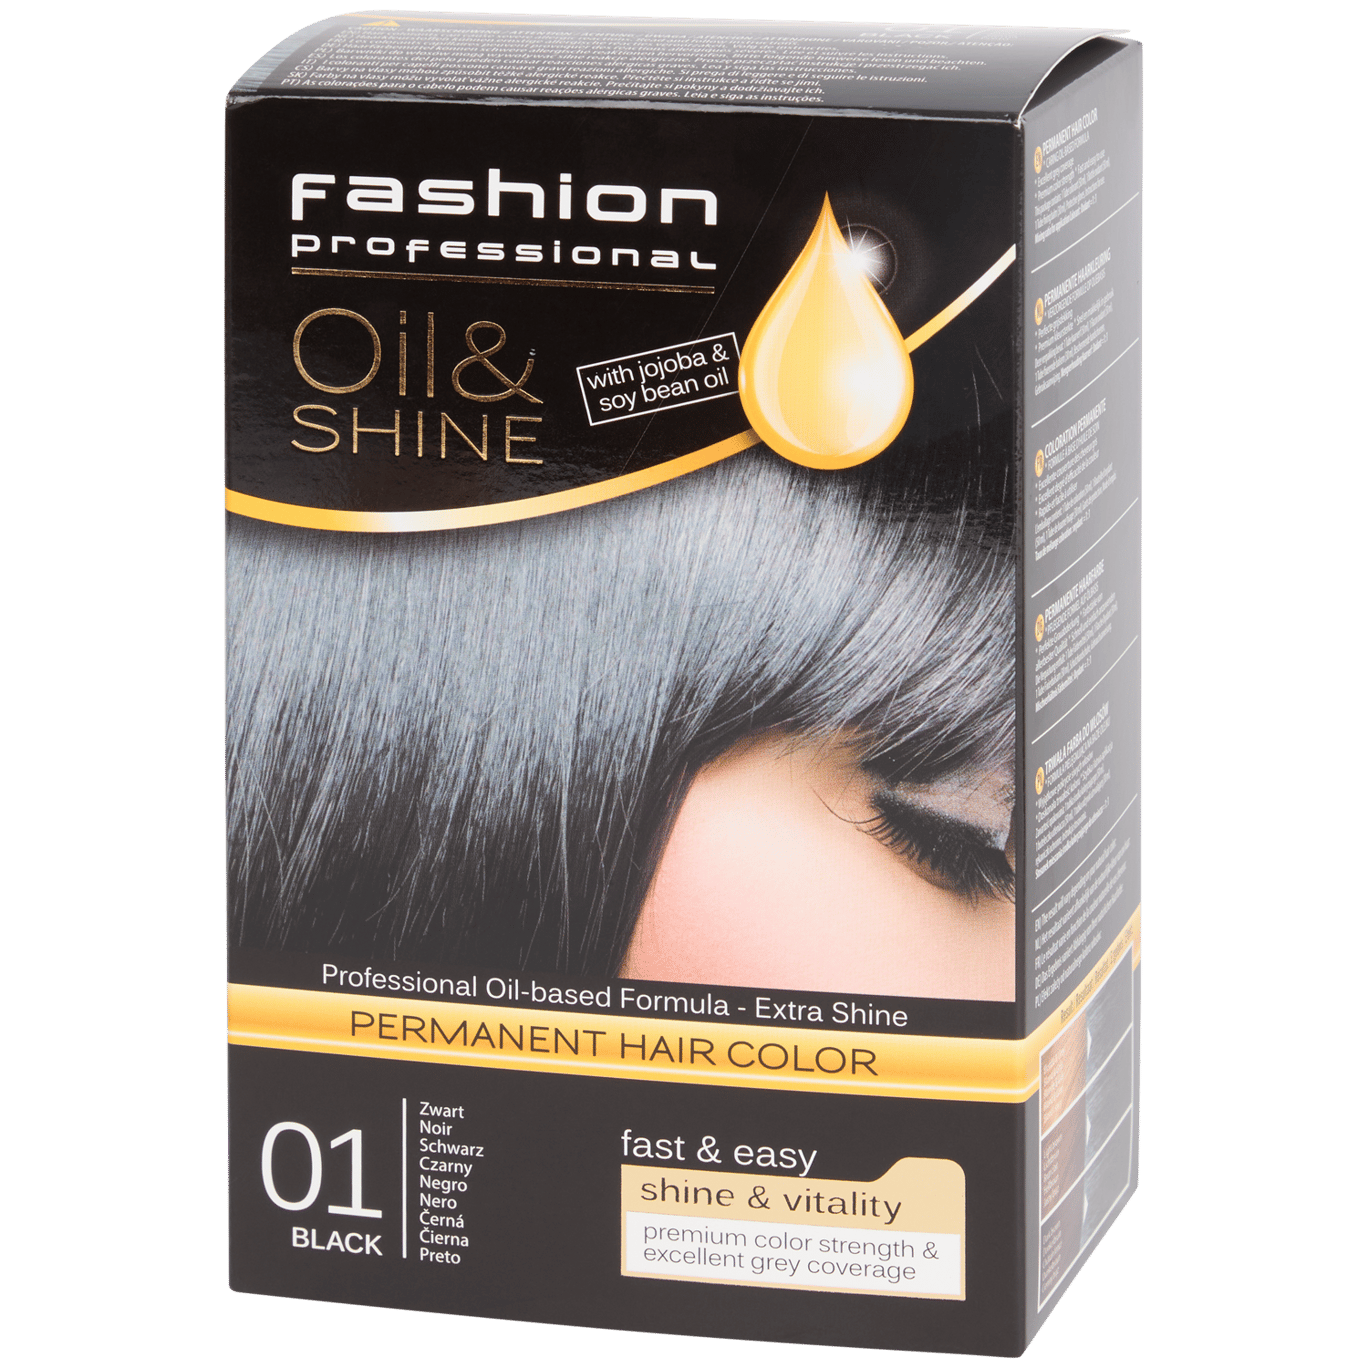 Coloration permanente pour cheveux Fashion Professional Oil & Shine